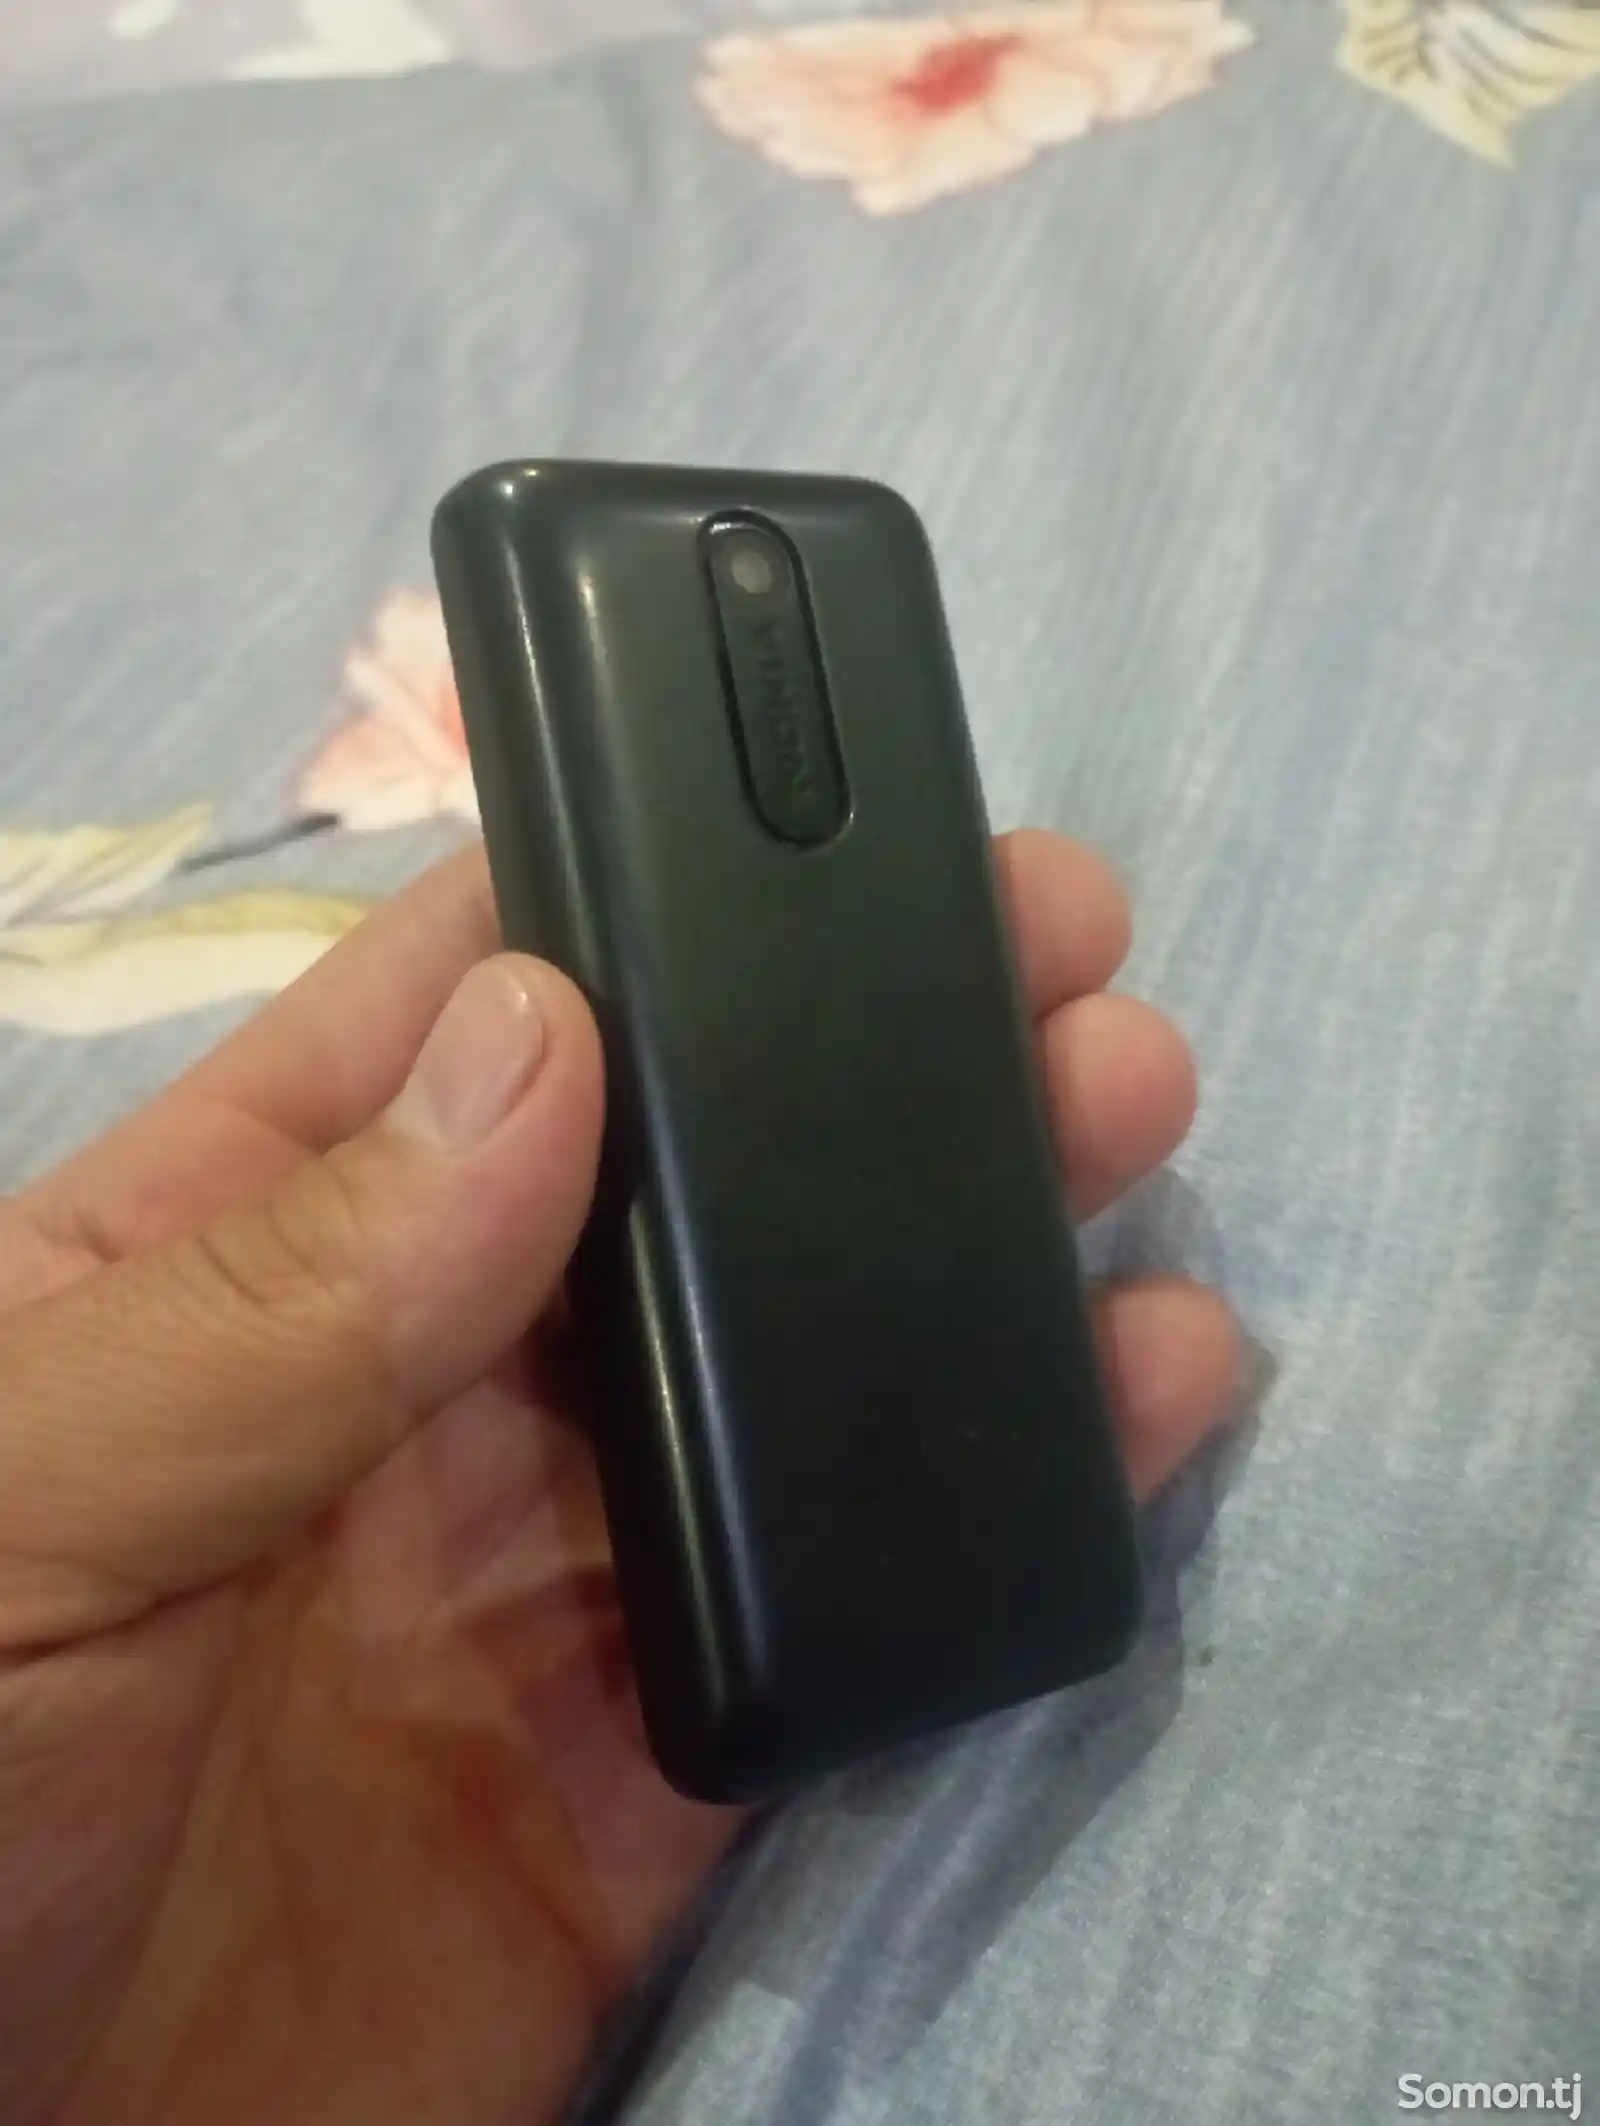 Nokia 108 2 sim-2